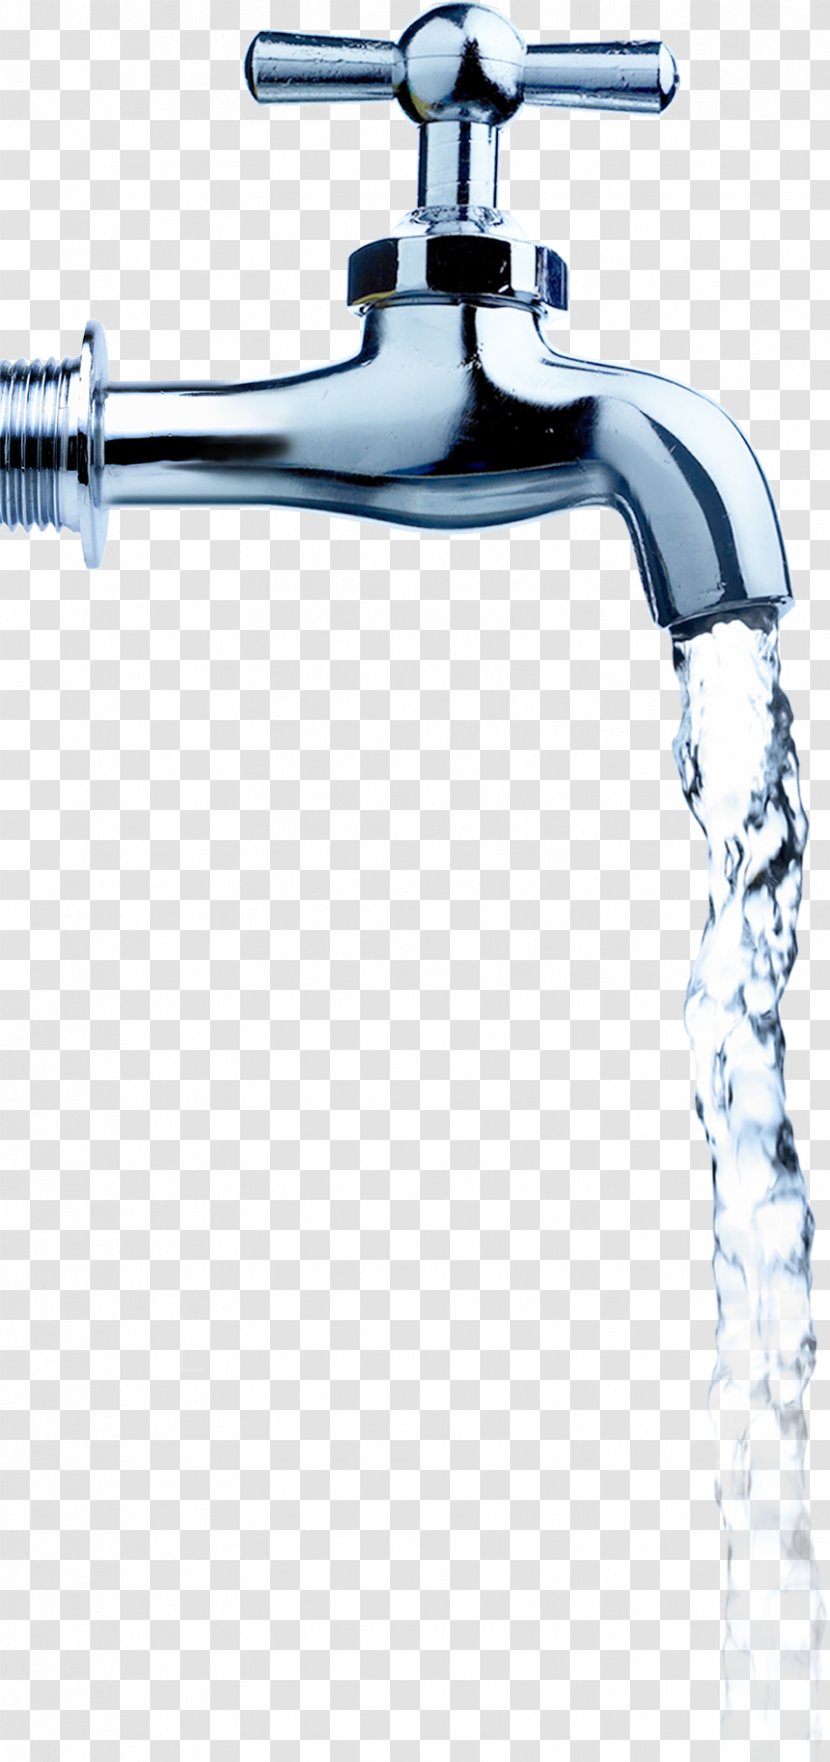 Faucet - Tap - Dental Water Jets Transparent PNG